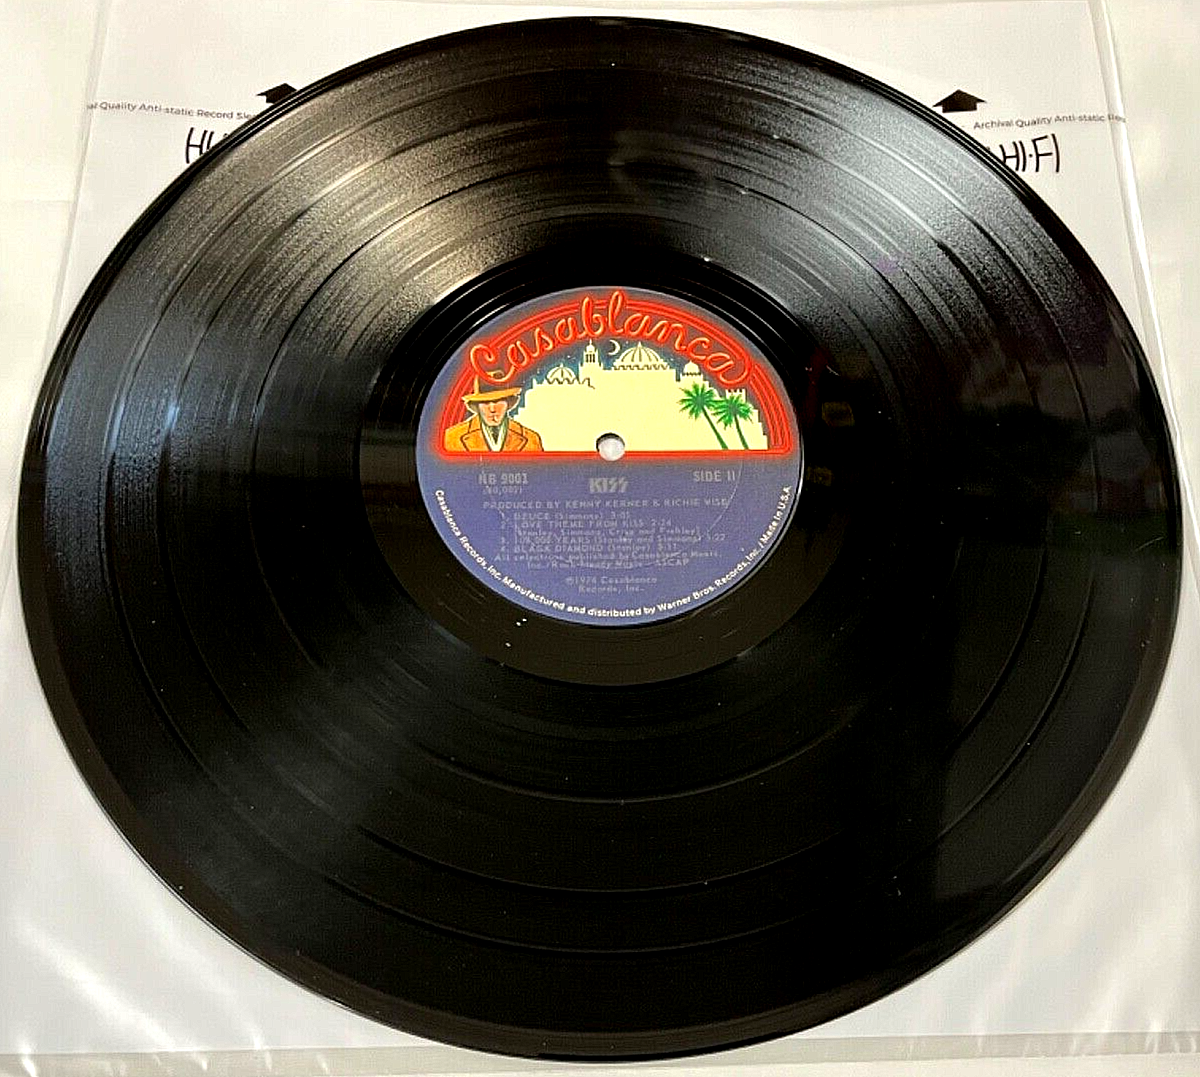 ::KISS Debut LP Vinyl NB9001 W/O KISSIN' TIME 1974 Ace Peter Aucoin Gene Rare